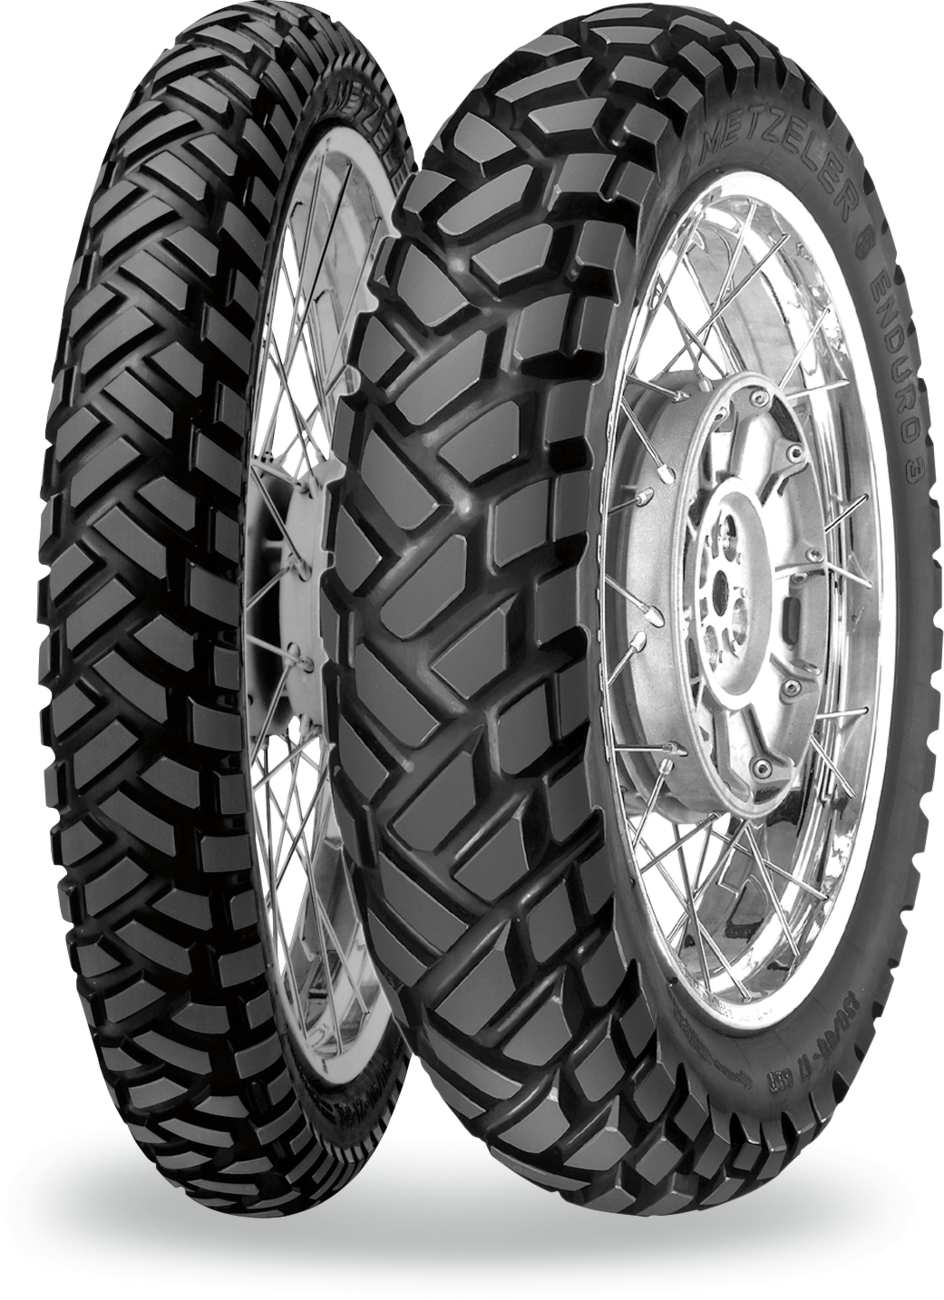 METZELER Tire - Enduro 3 Sahara - Rear - 140/80-18 - 70S 3983000